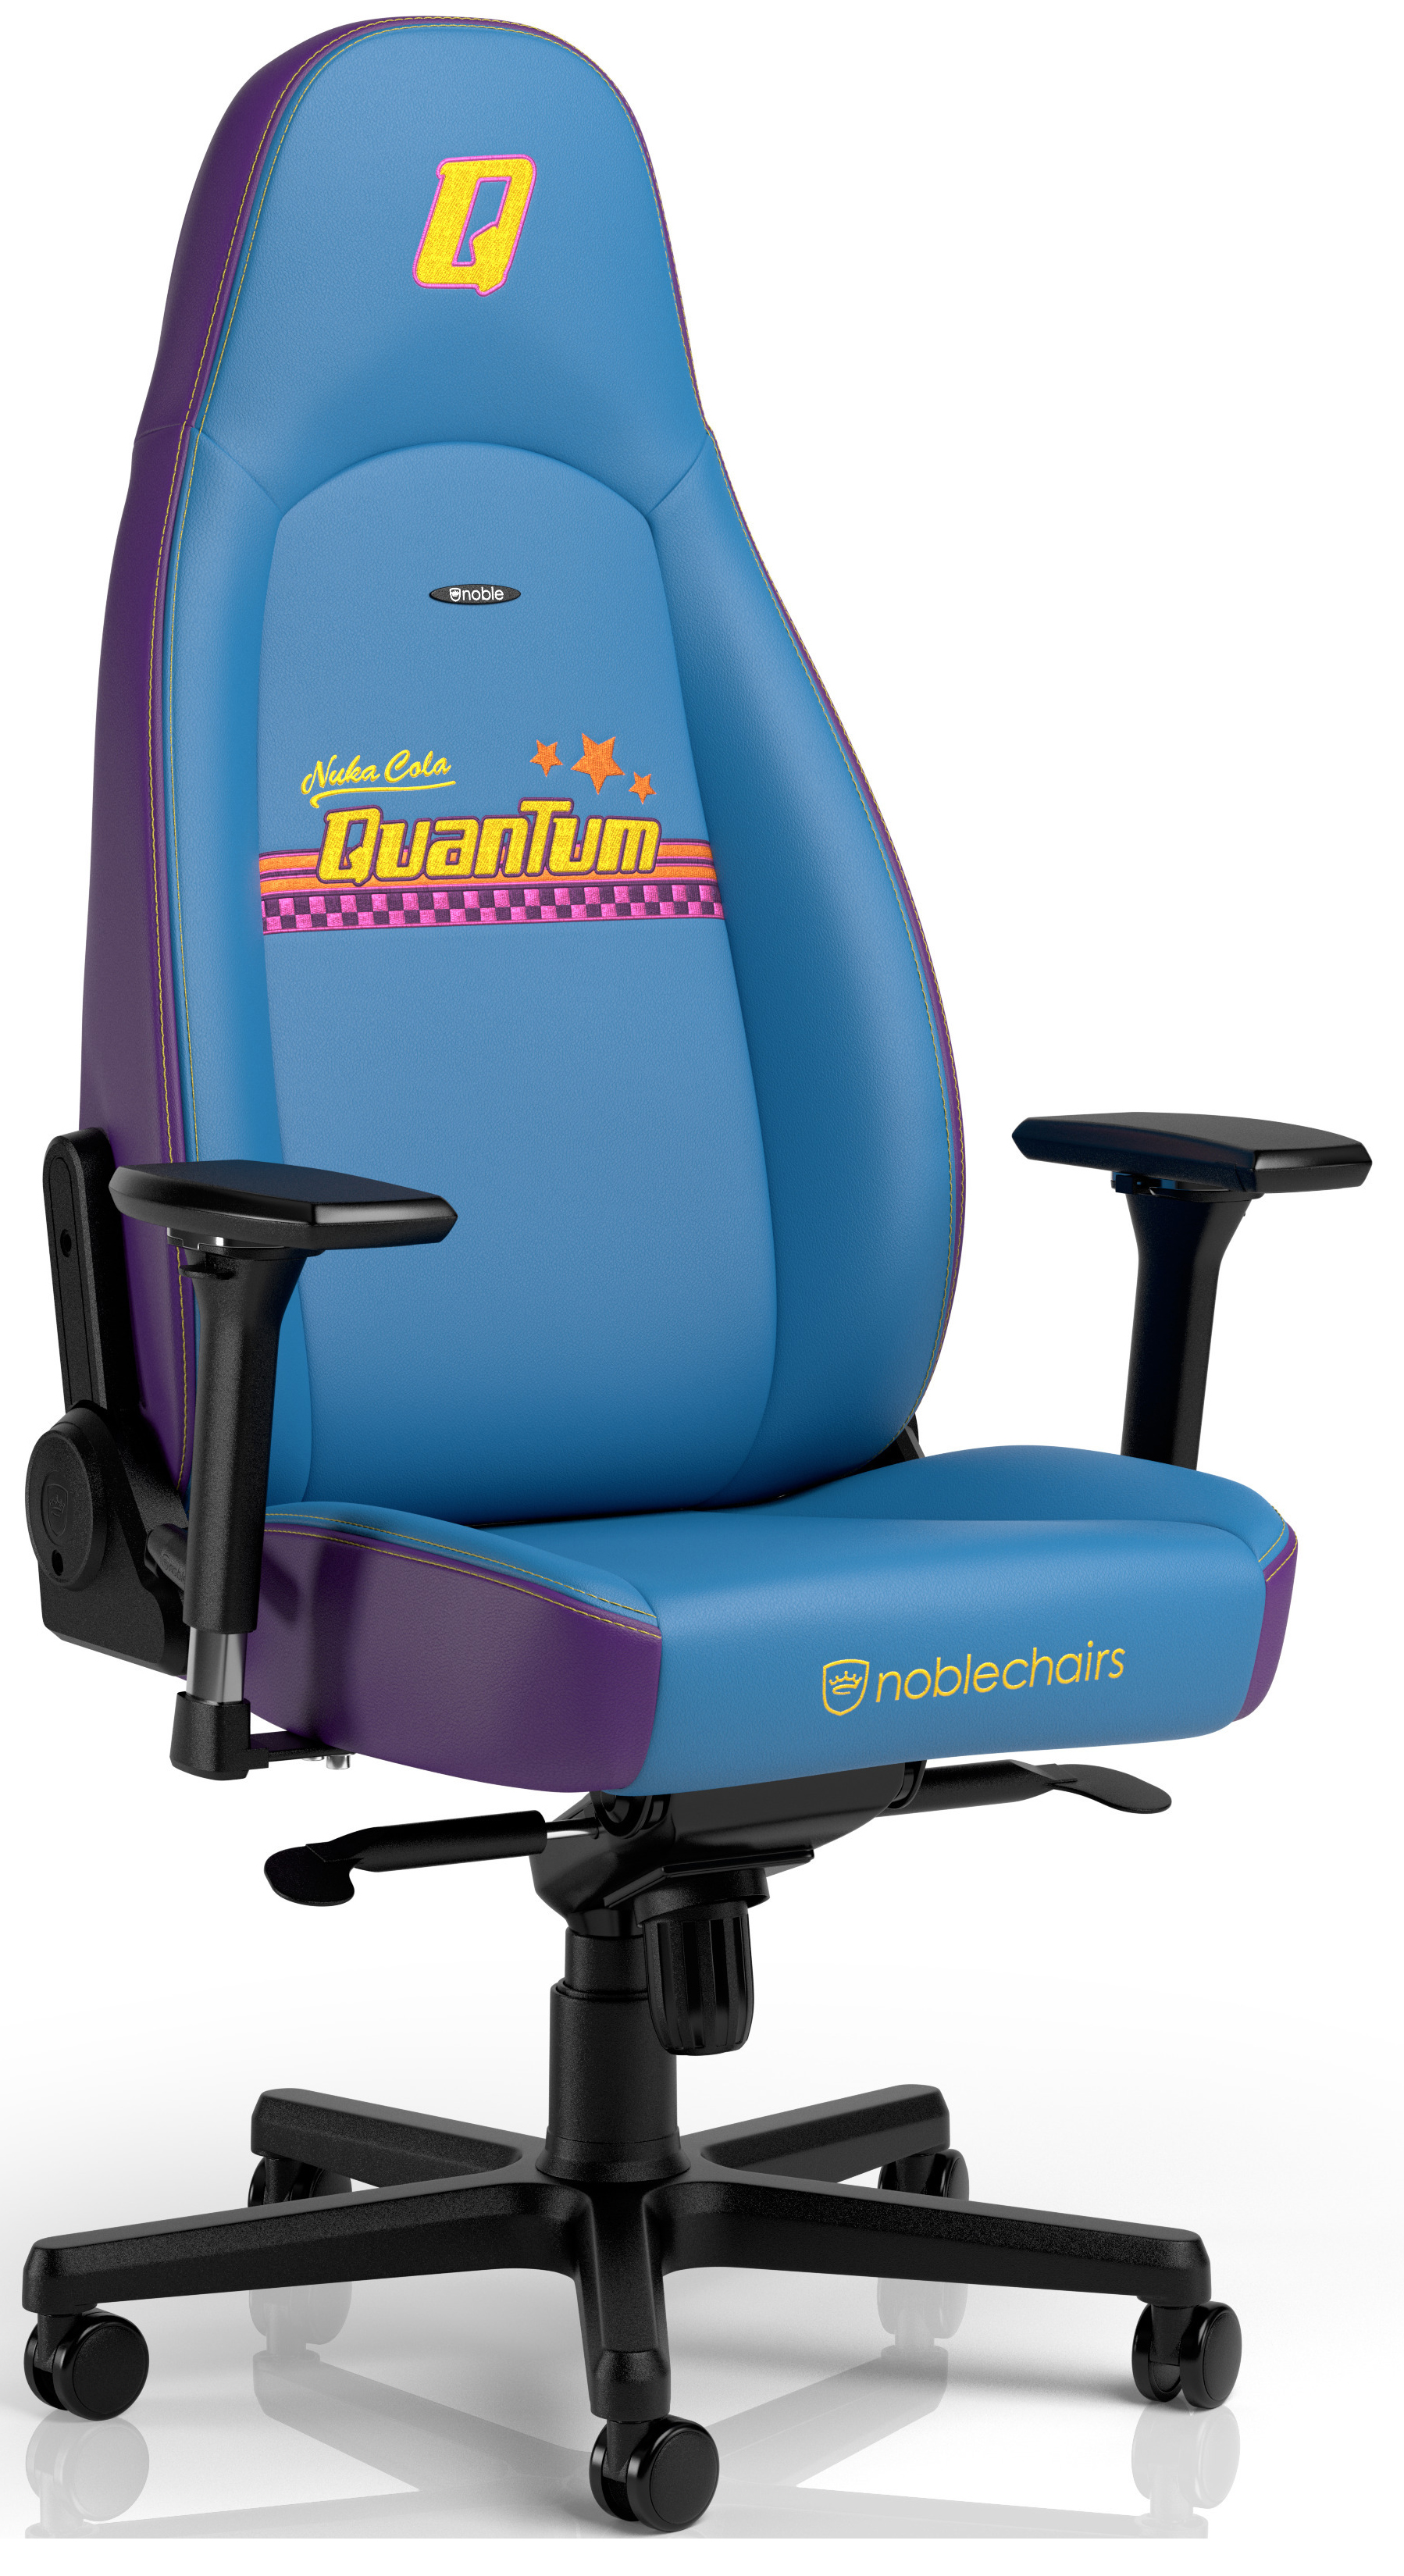 Cadeira noblechairs ICON - Fallout Nuka-Cola Quantum Edition